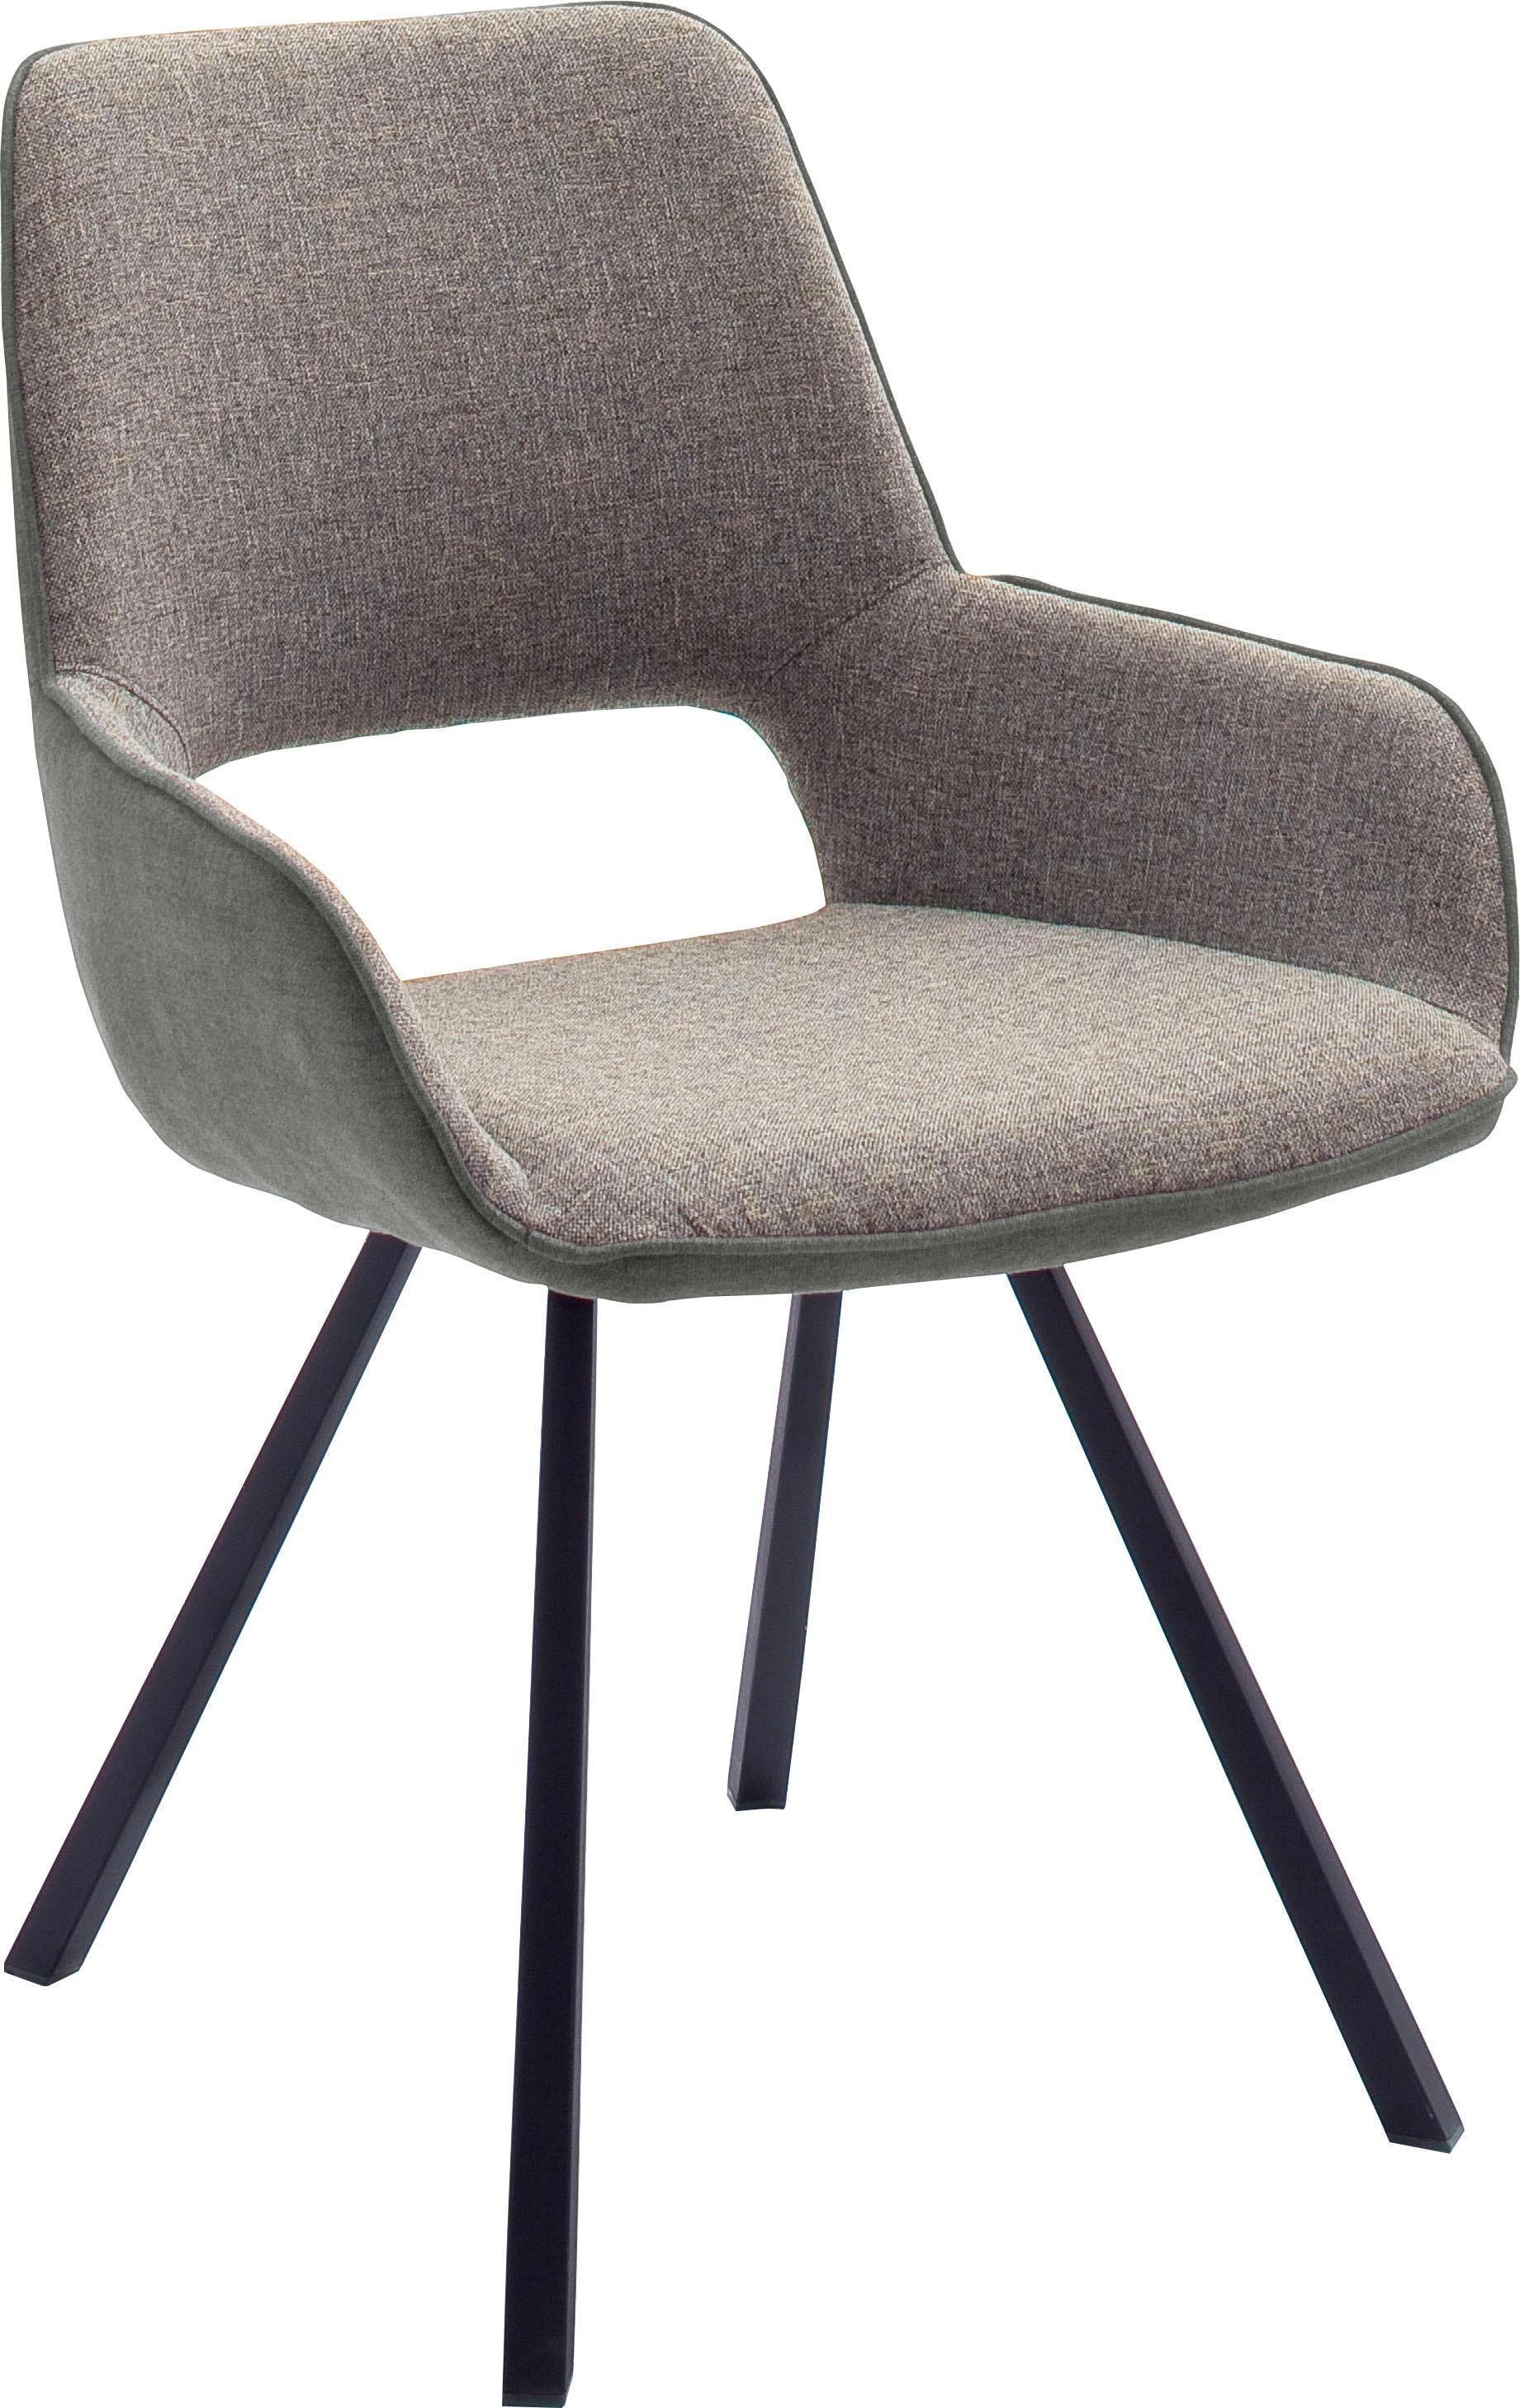 MCA furniture 4-Fussstuhl bis prix belastbar à Kg »Parana«, 120 2 (Set), St., Stuhl bas